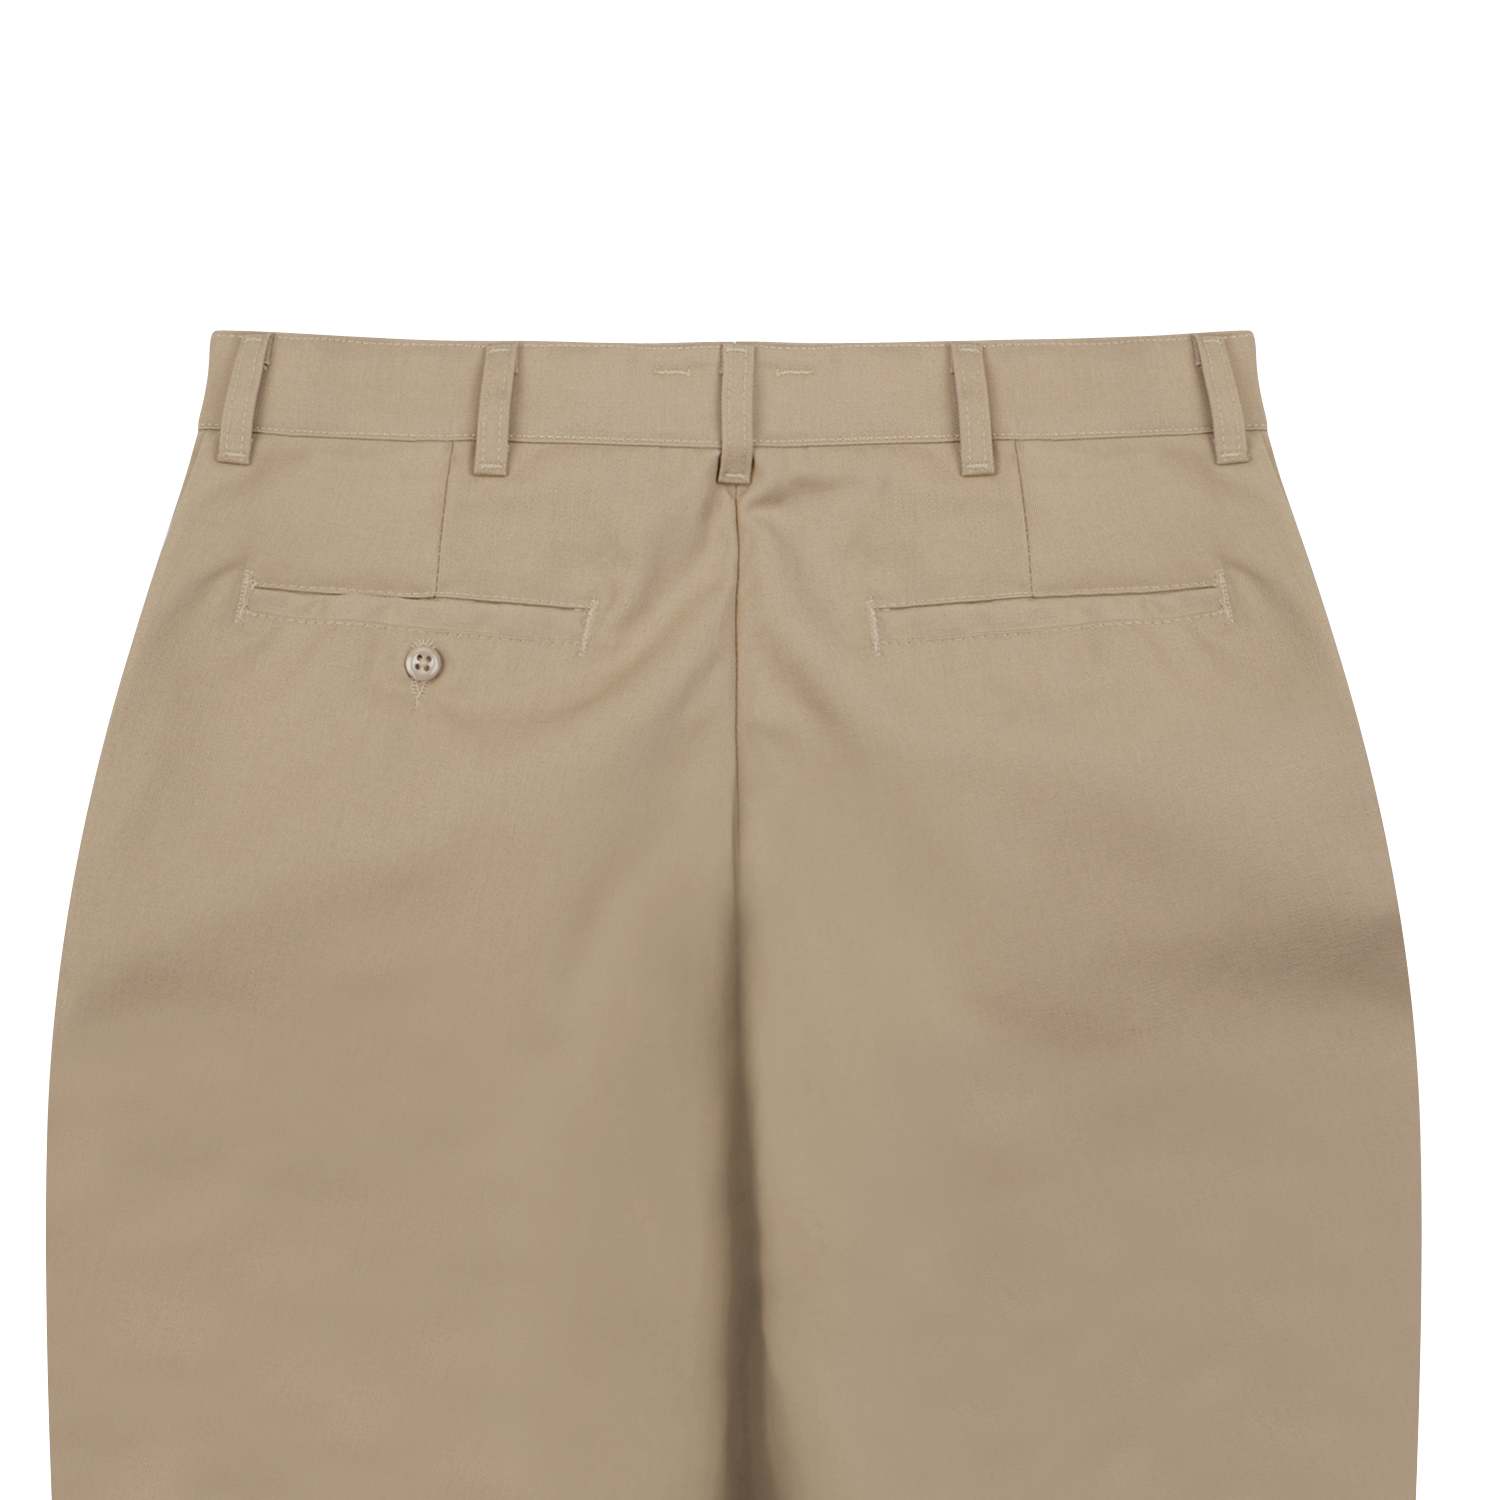 Red Kap PT20 Men's Dura-Kap Industrial Pants White Size 38 X 28 